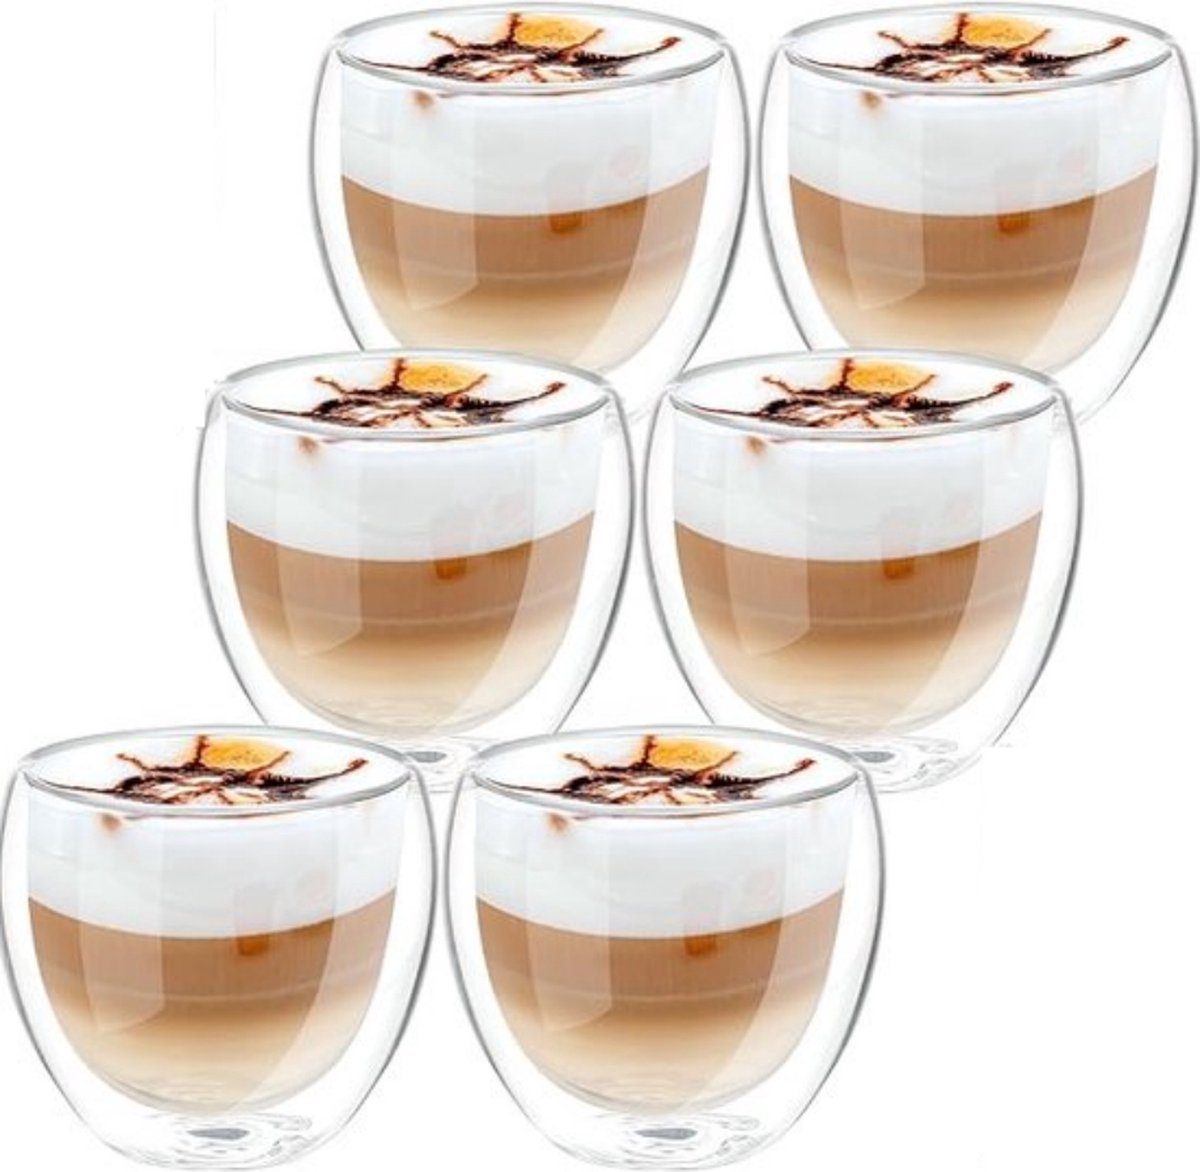 Mkitnvy Dubbelwandige glazen, dubbelwandige koffieglazen, koffiekopjes, glas, thermoglazen, espressokopjes, glas, set van 6 (250ml)